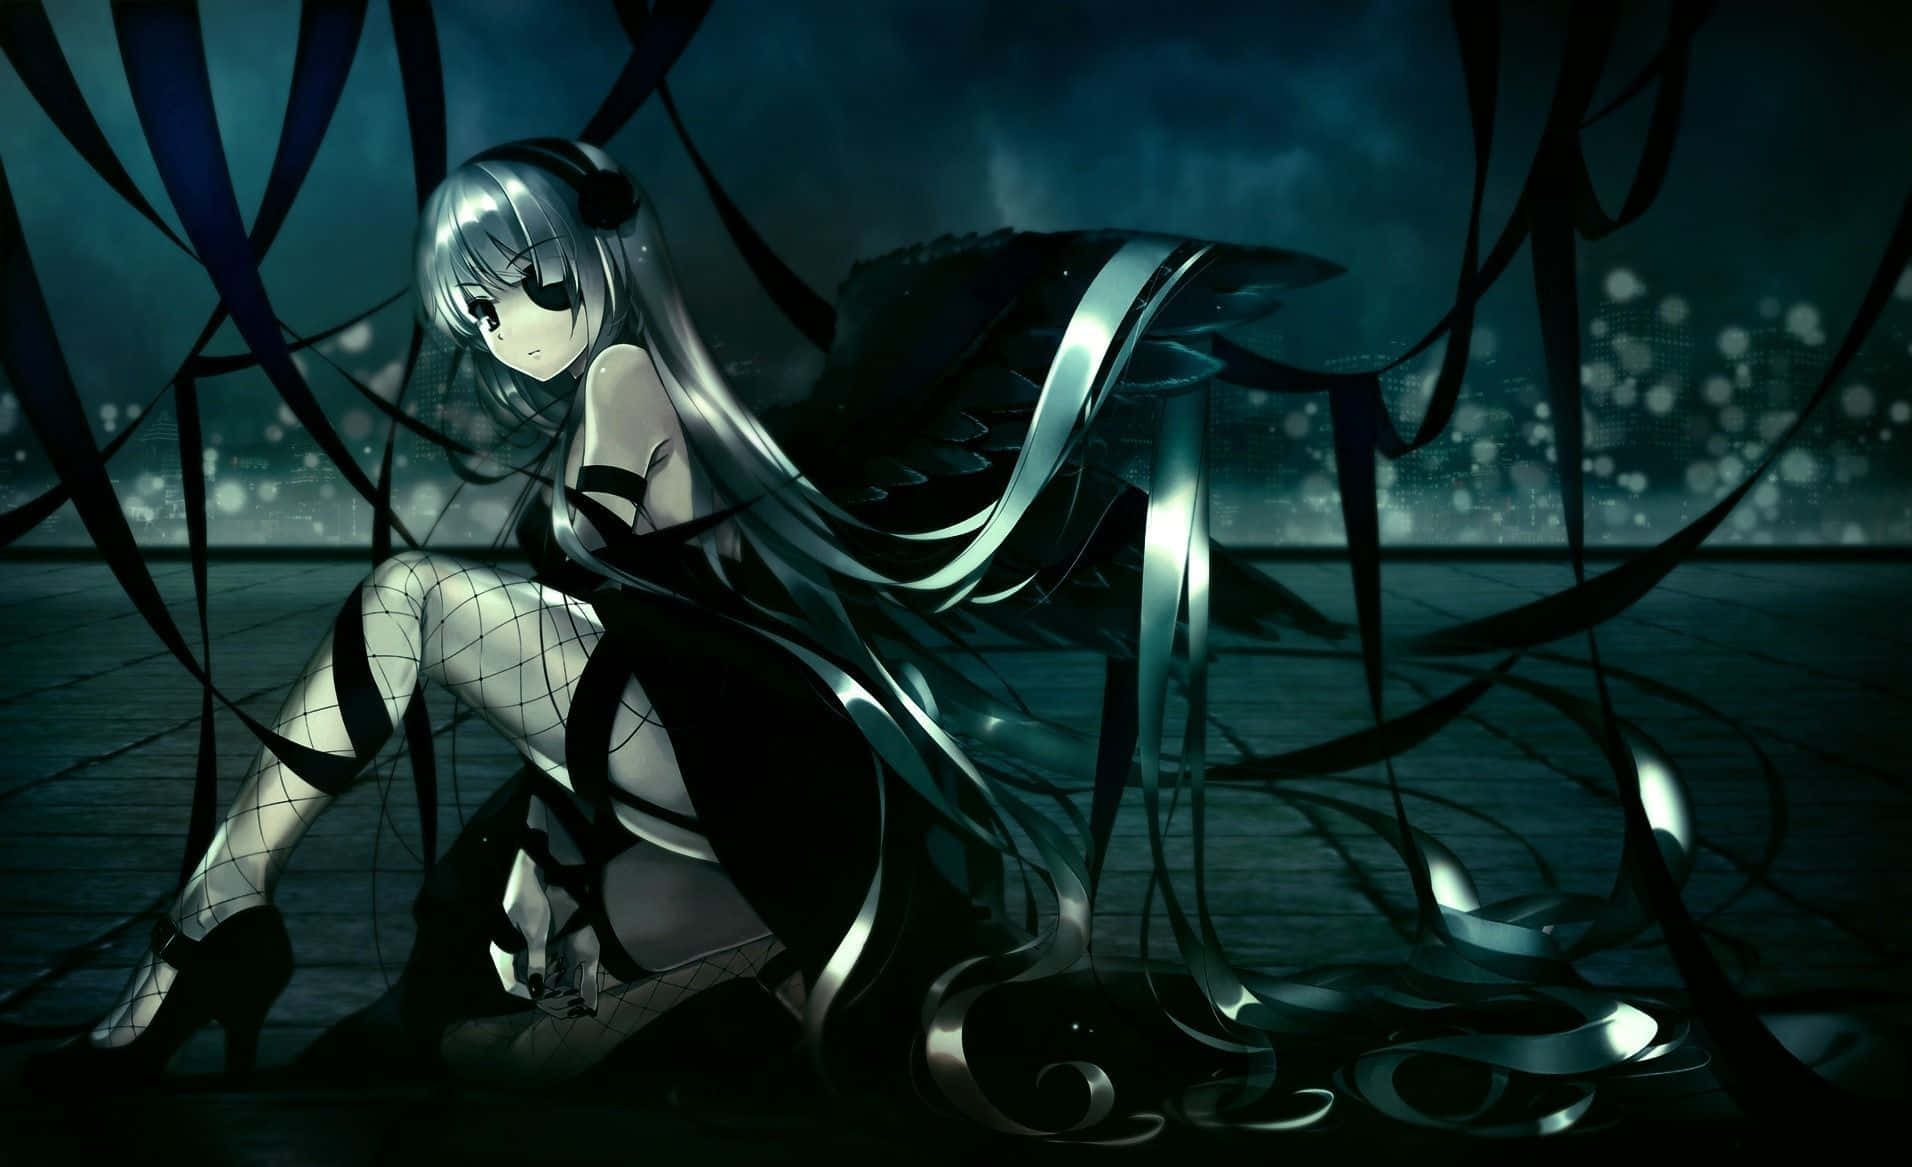 A Sad Dark Anime Figure Staring Into The Distance Wallpaper